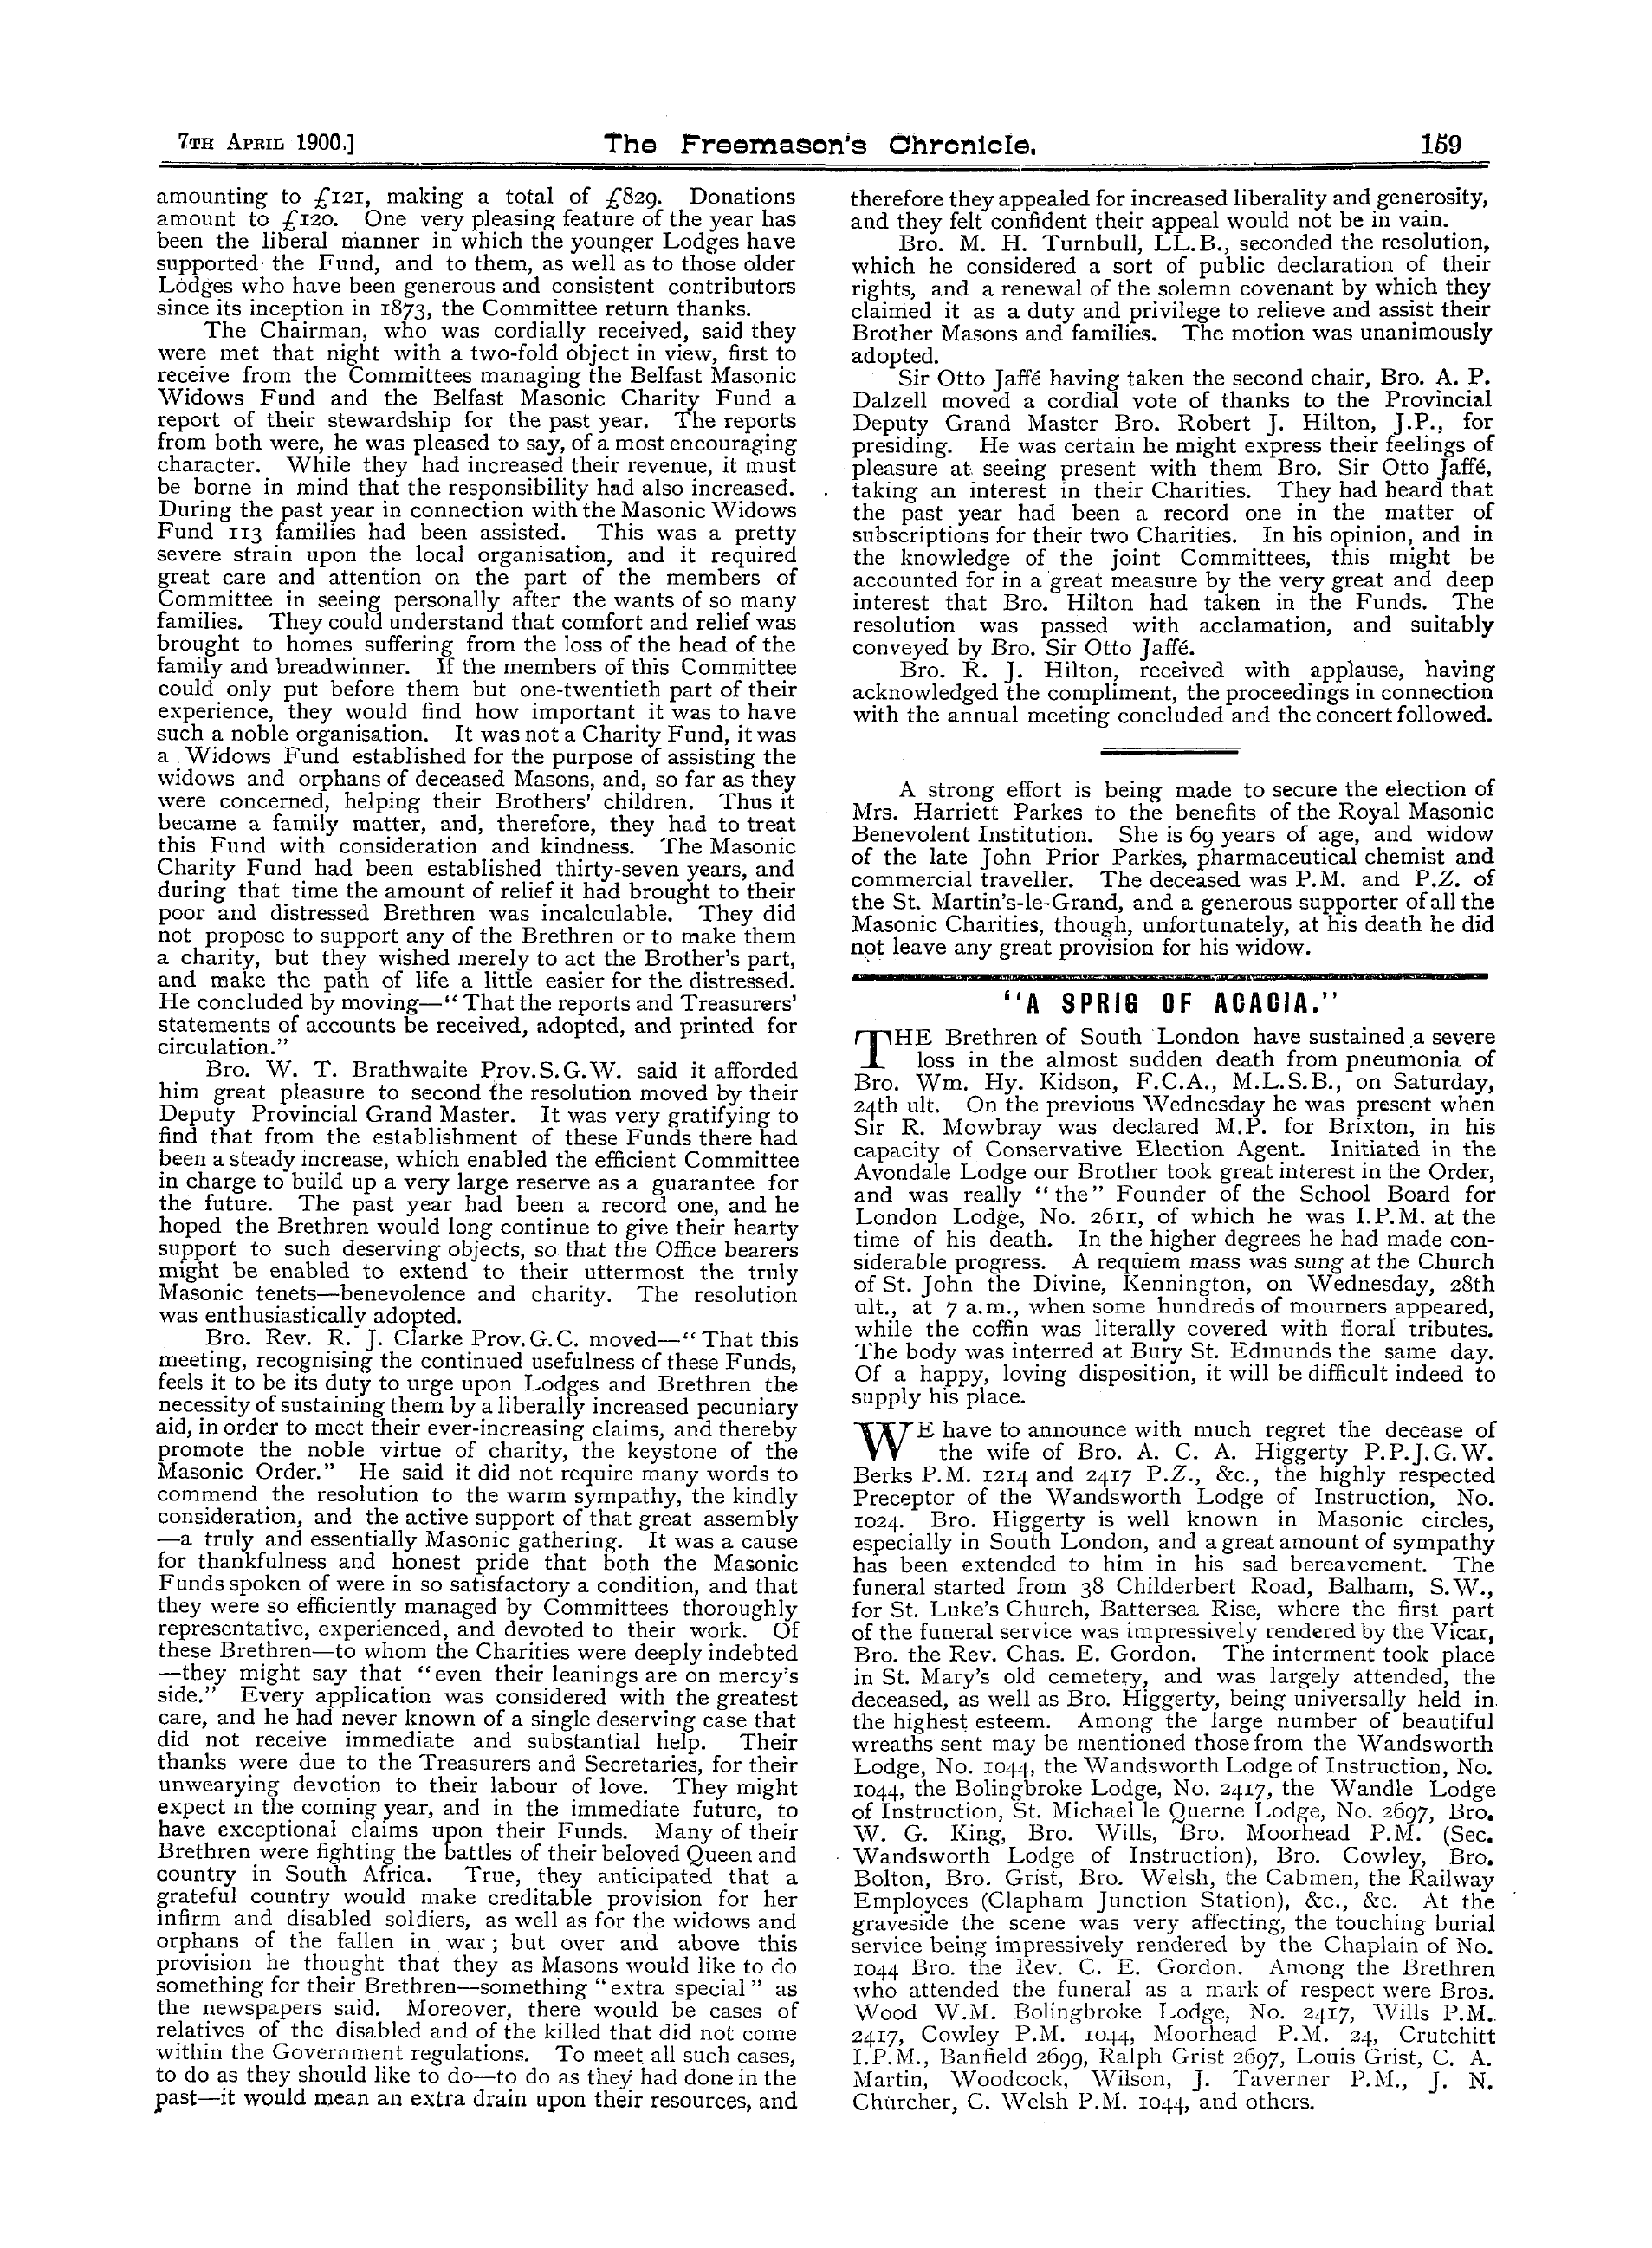 The Freemason's Chronicle: 1900-04-07 - ''A Sprig Of Acacia.''